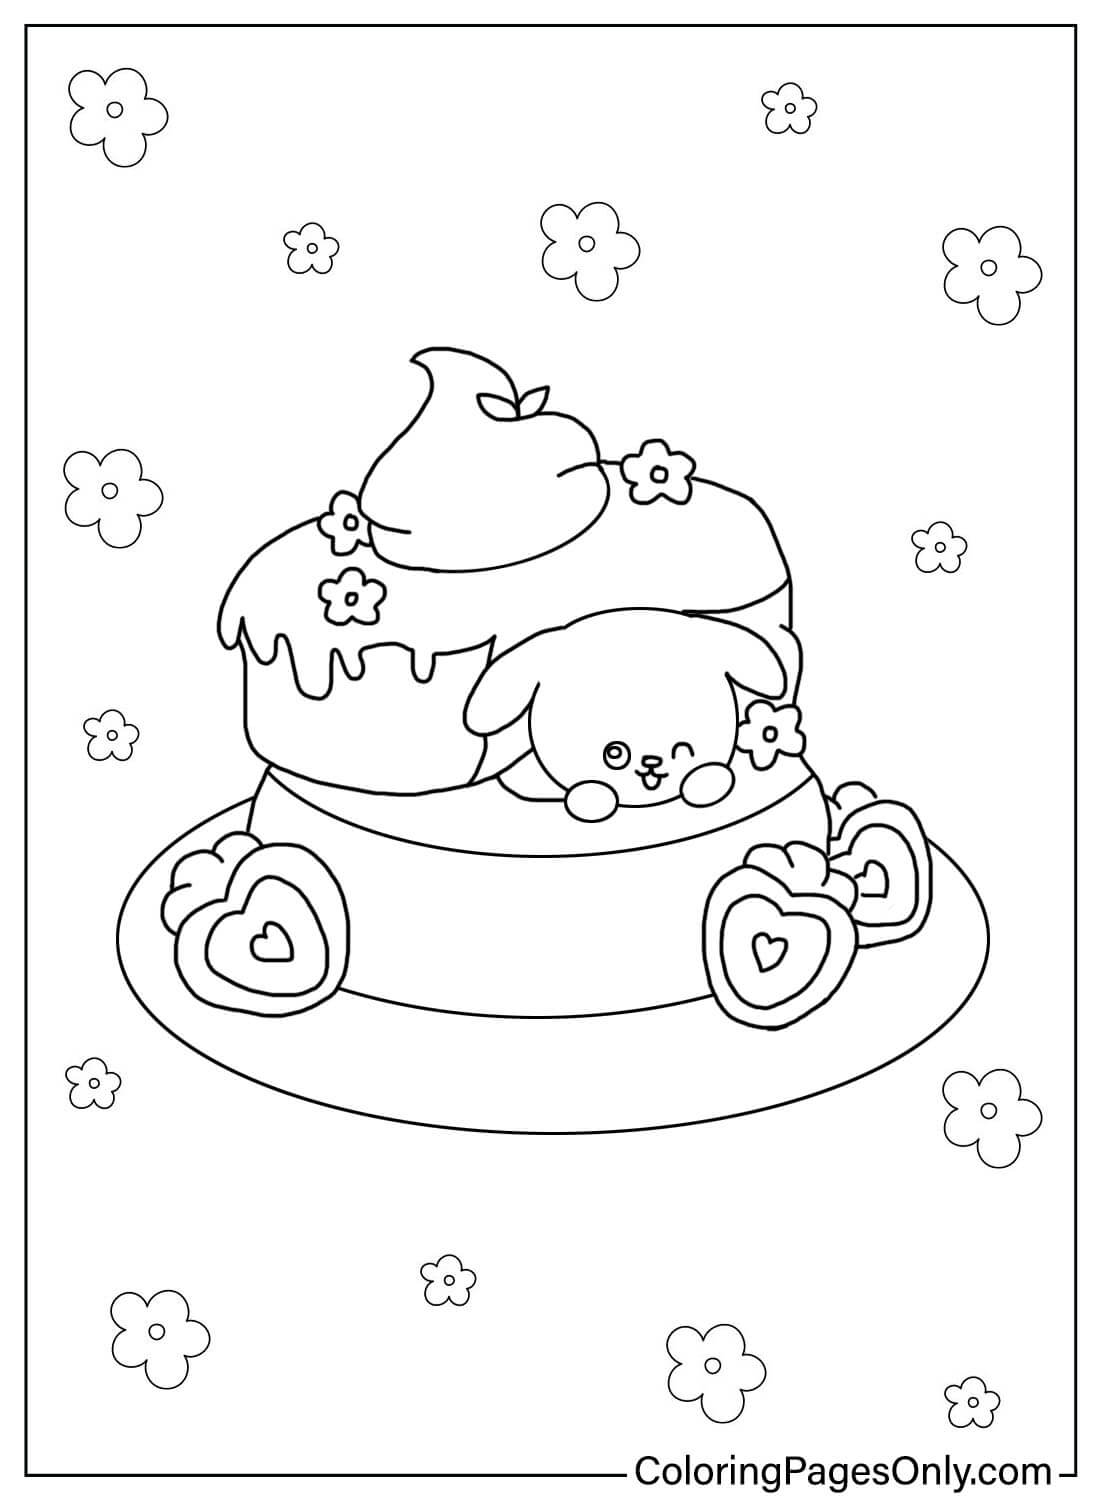 Printable Coloring Page Cake